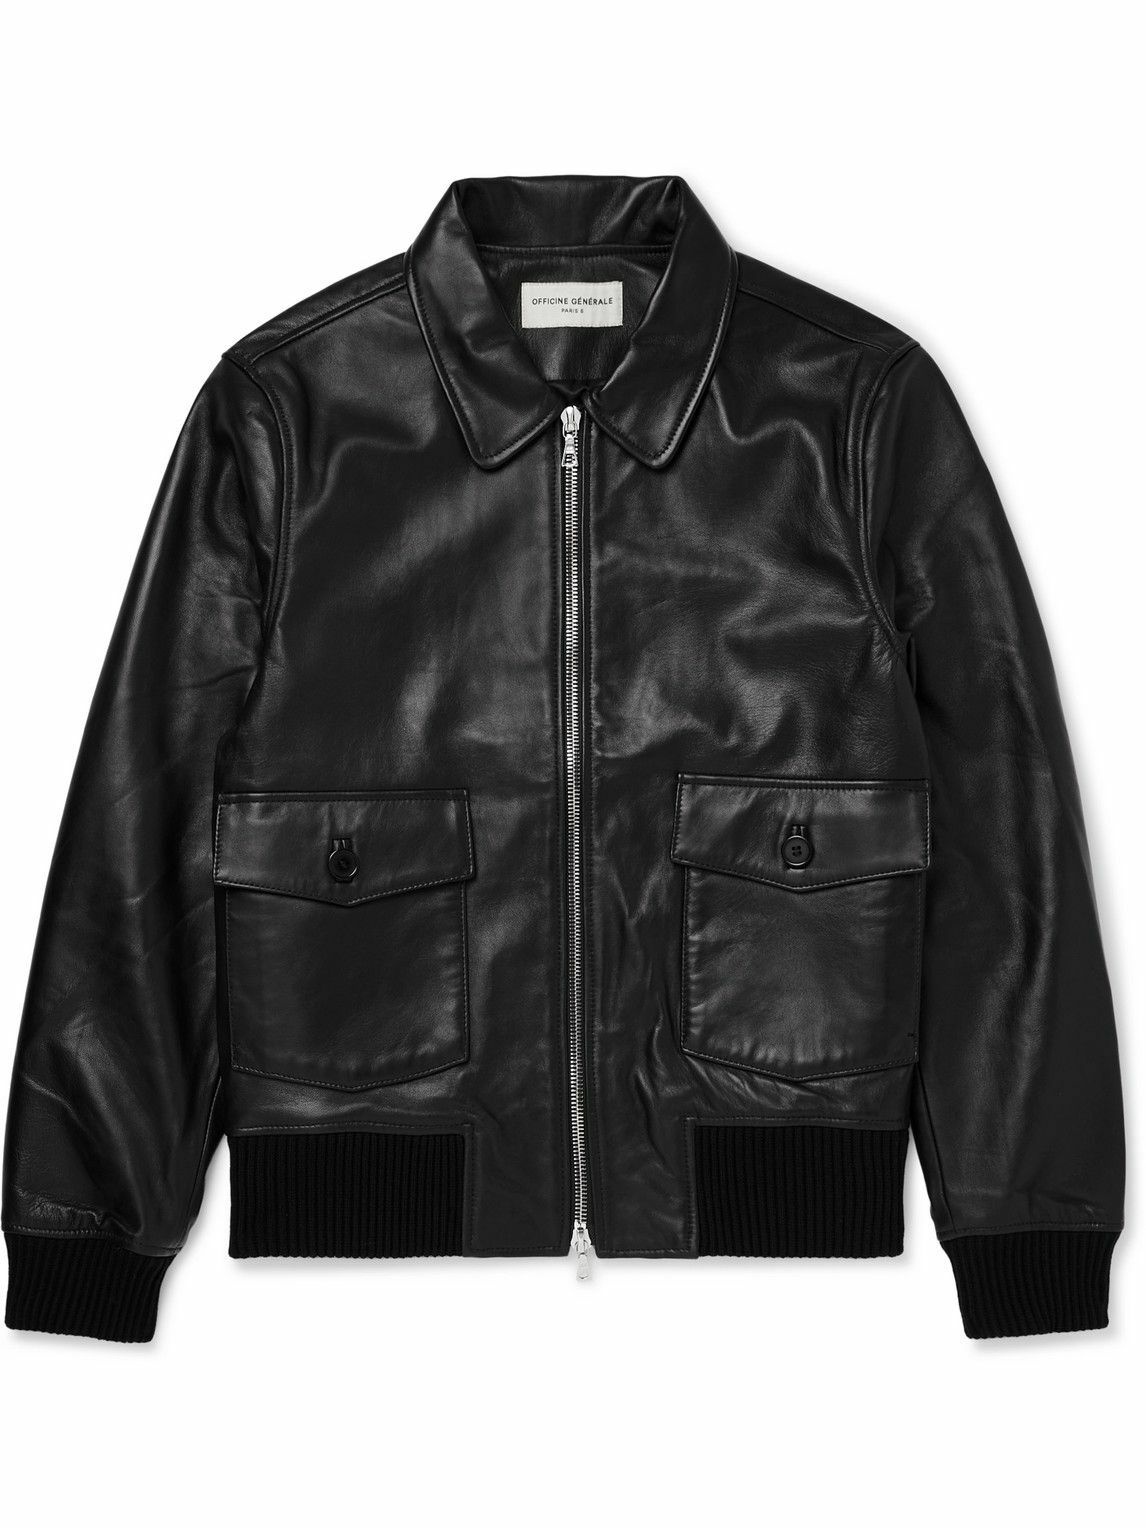 Officine Générale - Gianni Leather Jacket - Black Officine Generale